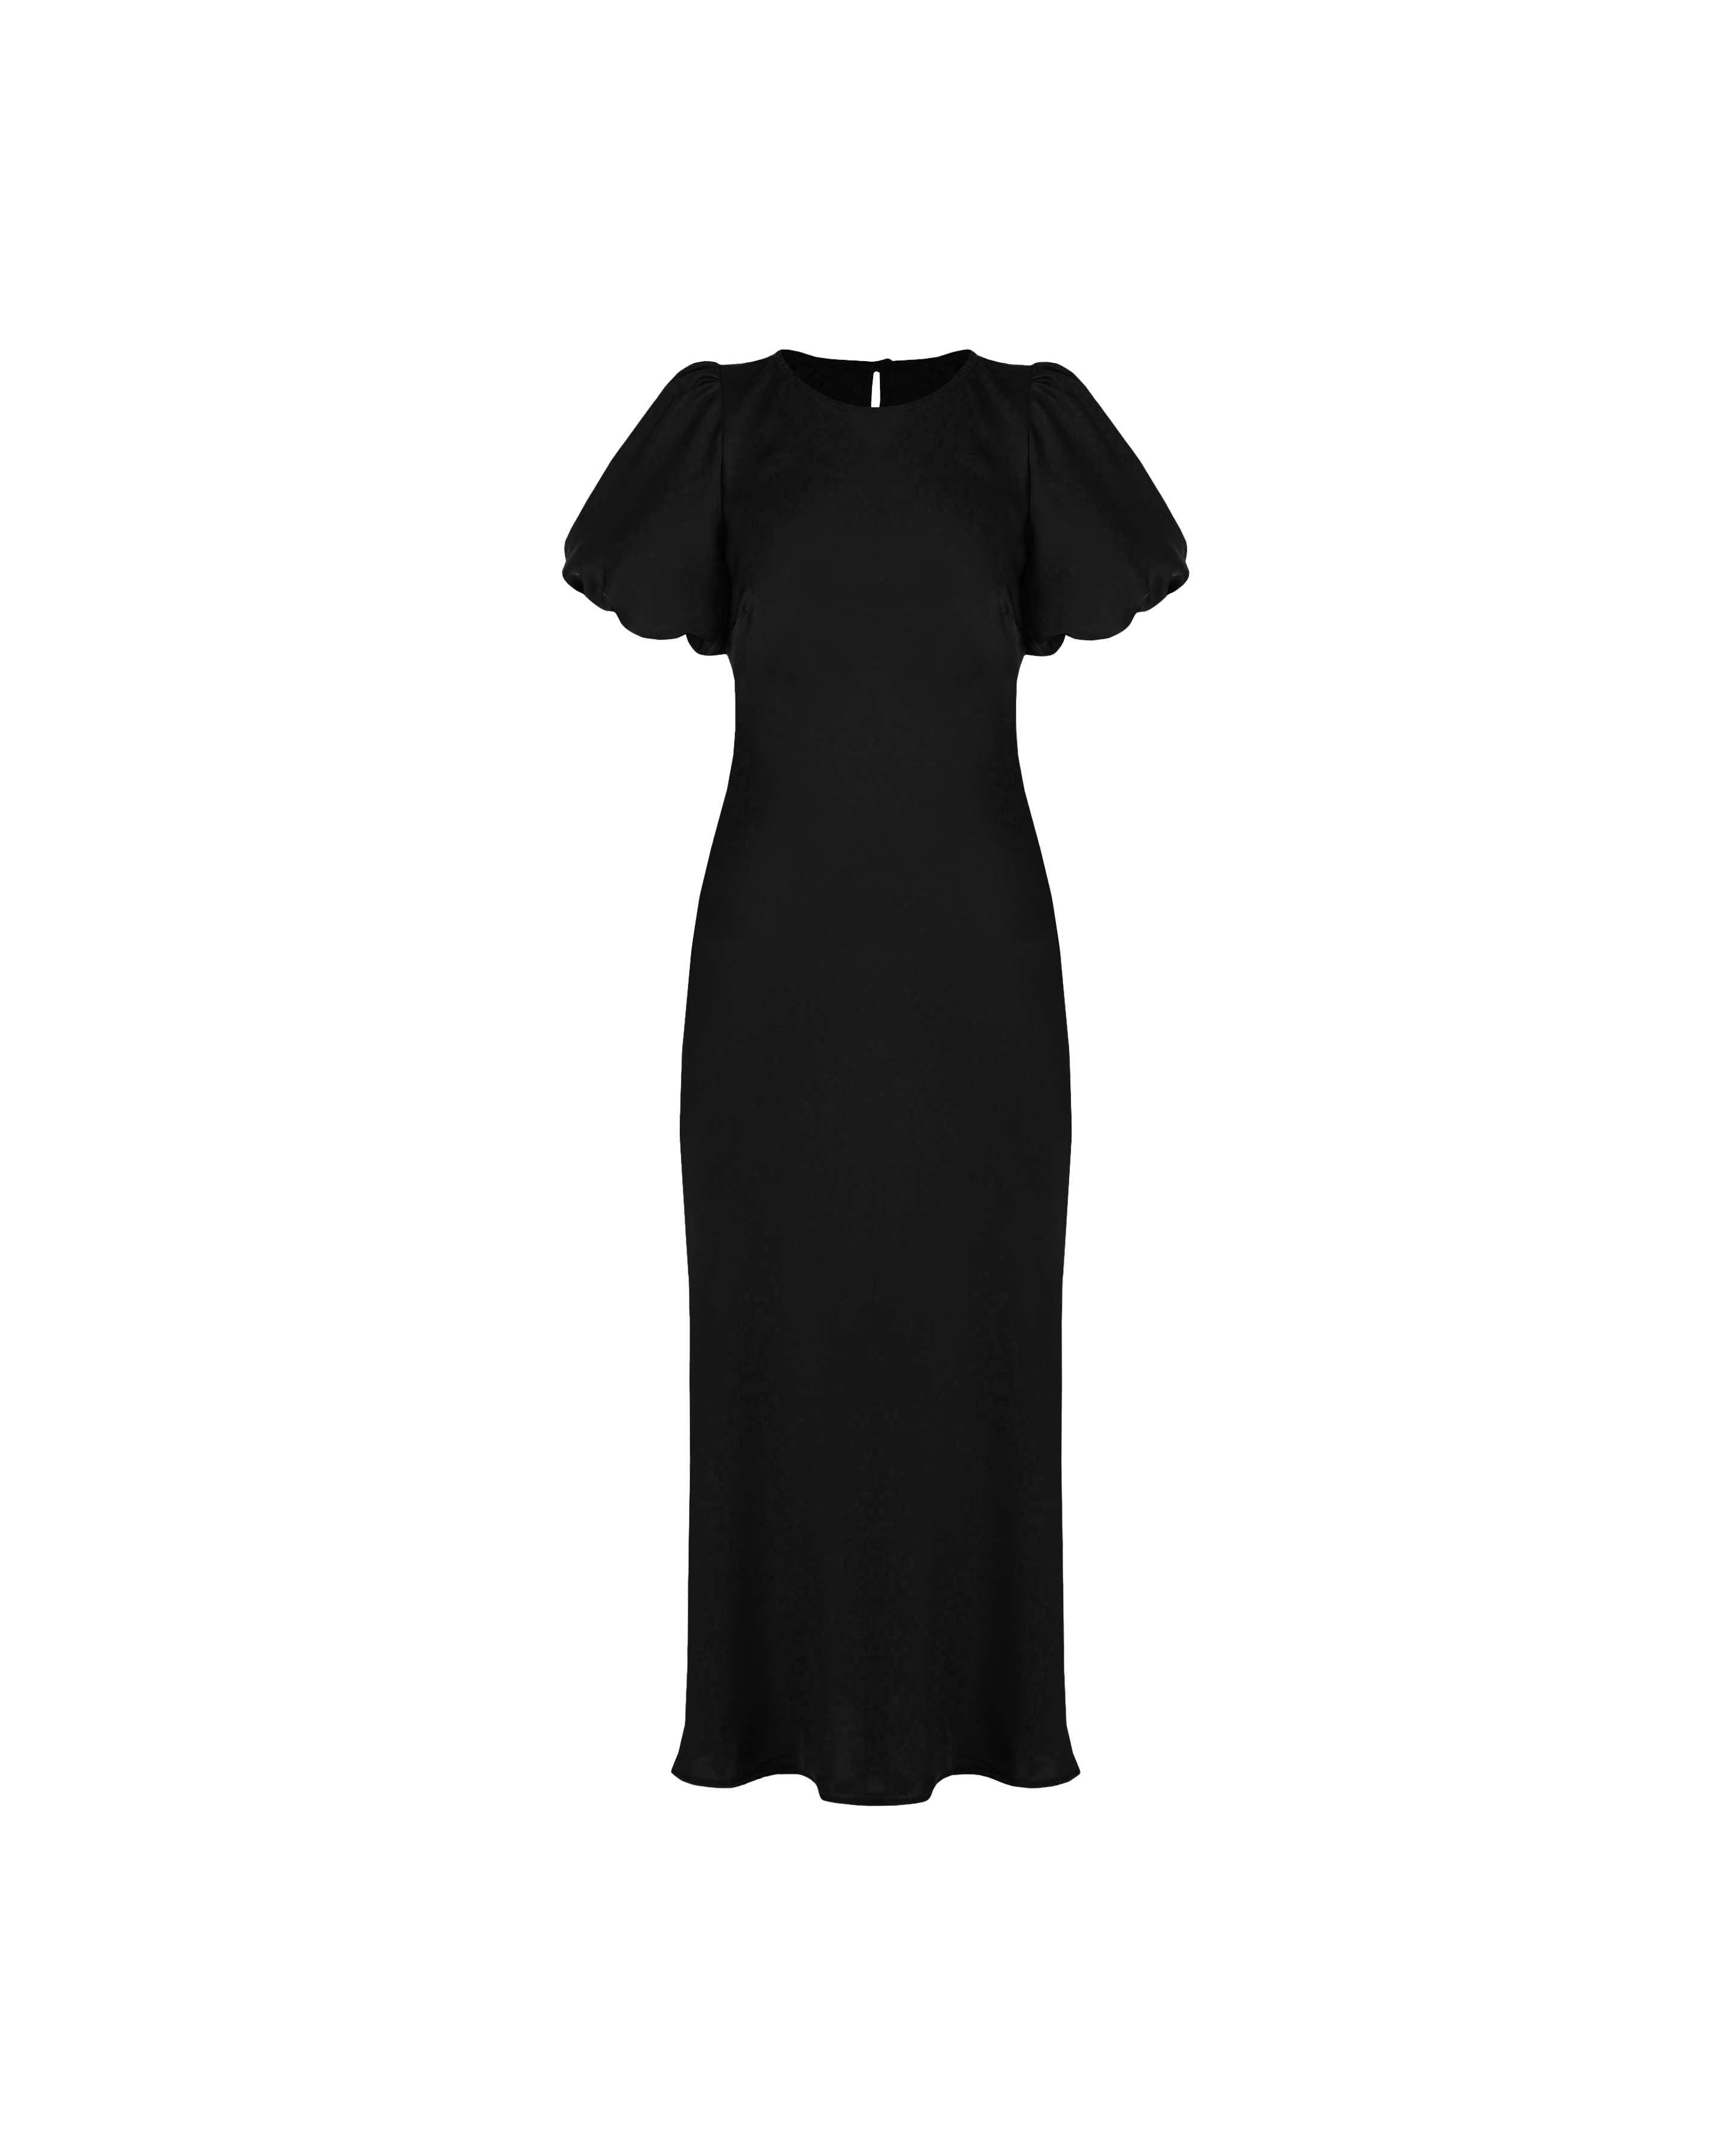 KENDALL SATIN DRESS BLACK | RUBY